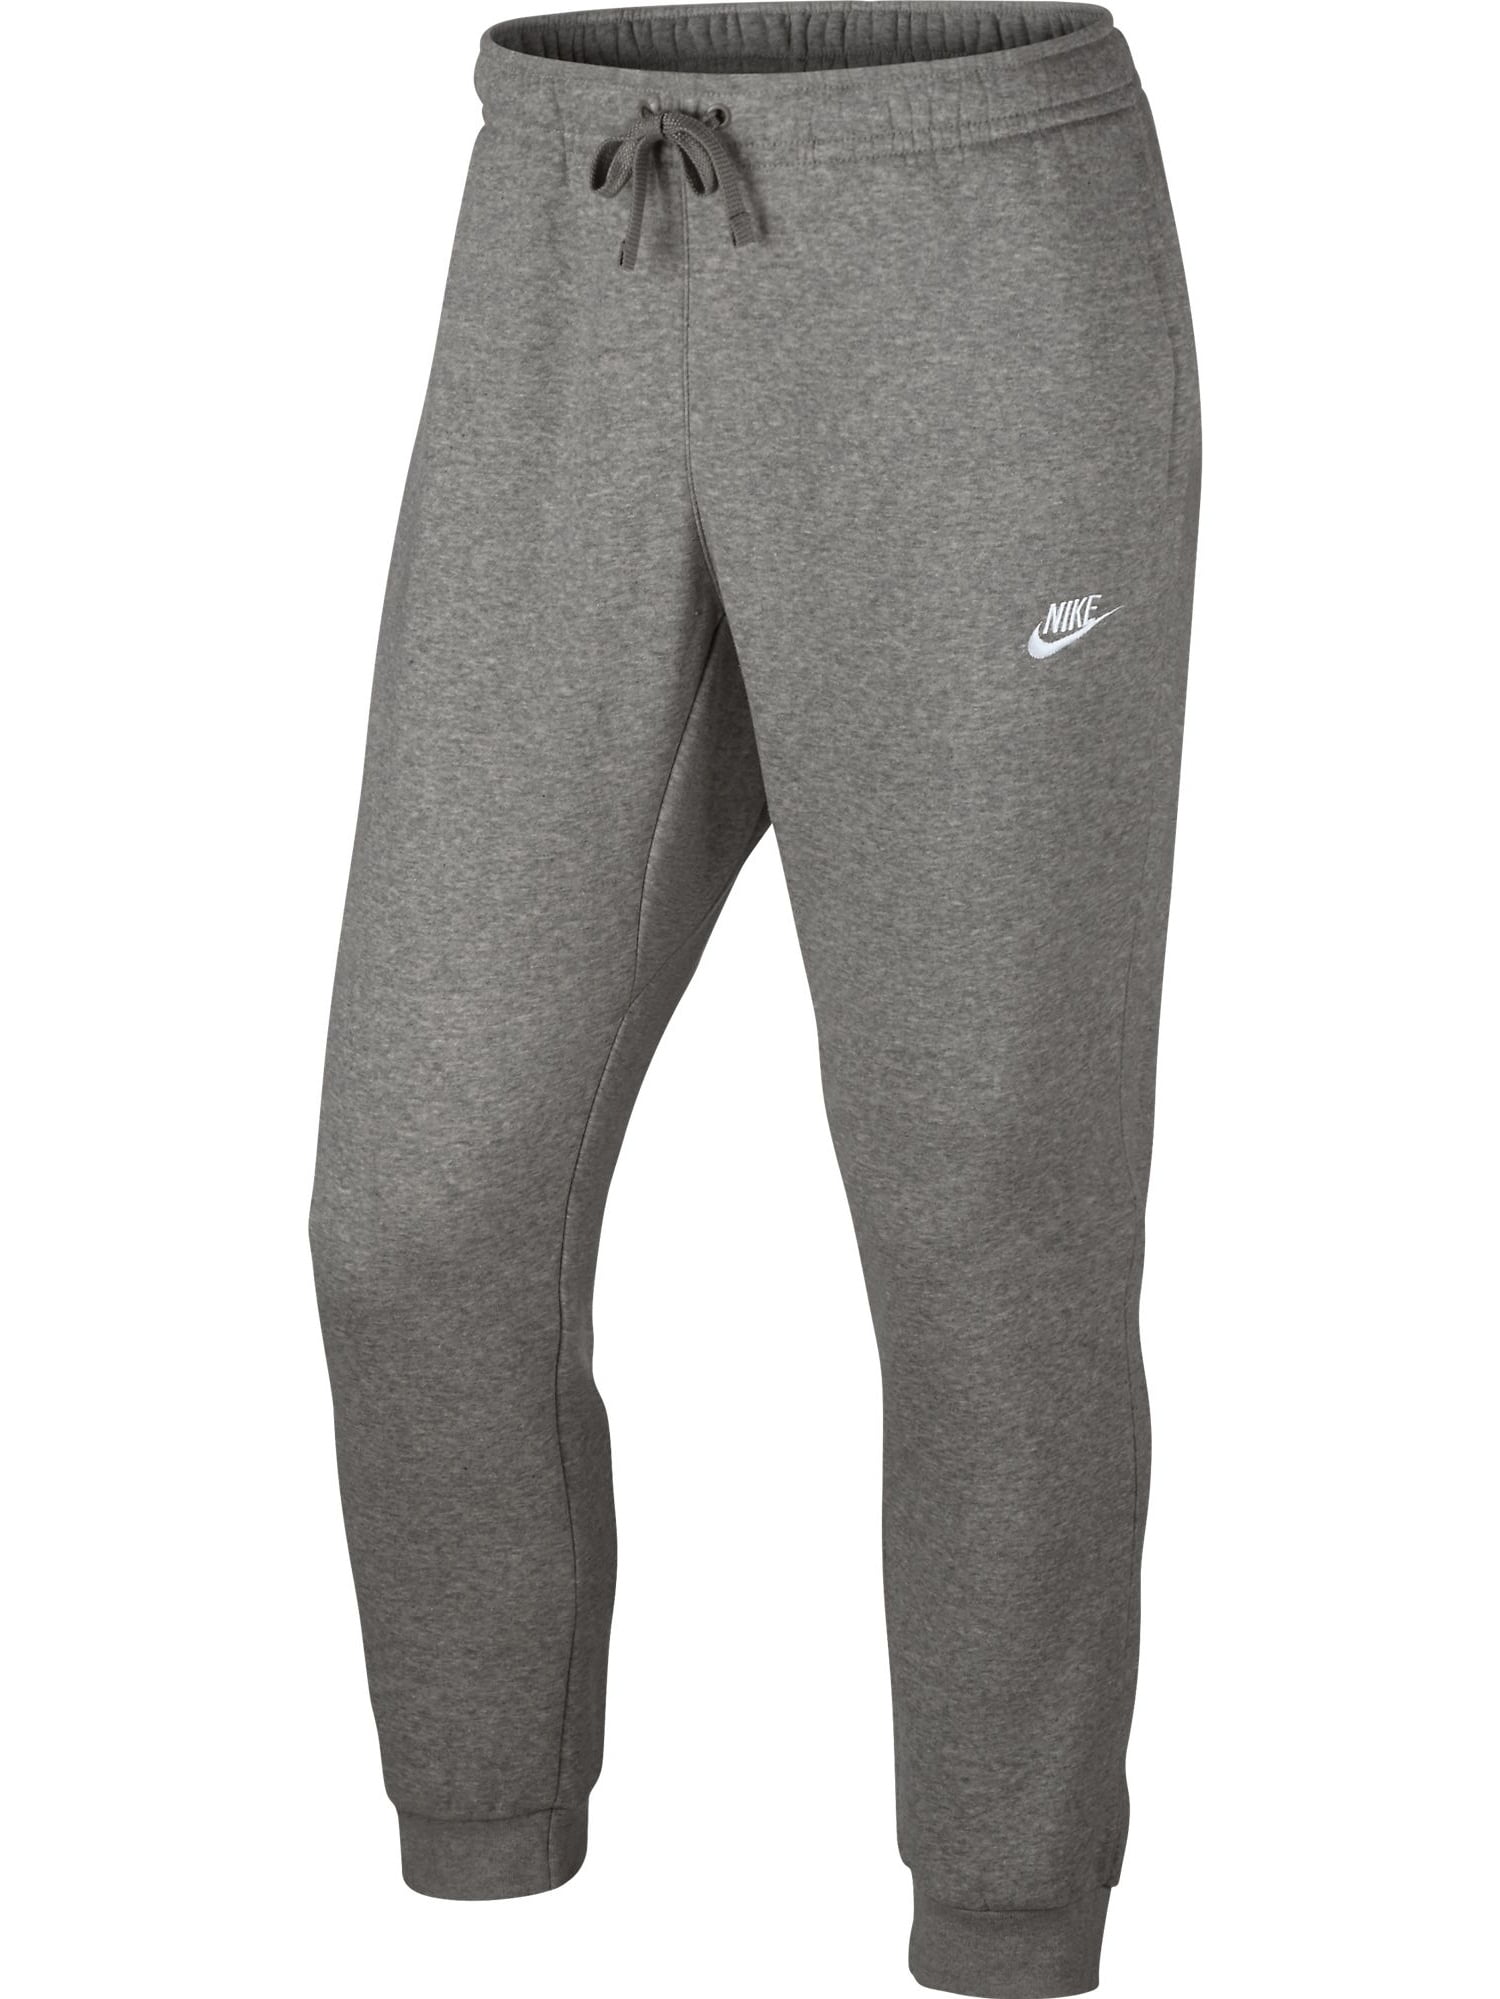 Nike Men's Athletic Wear Ribbed Cuff Drawstring Fleece Sweatpants Grey XL 